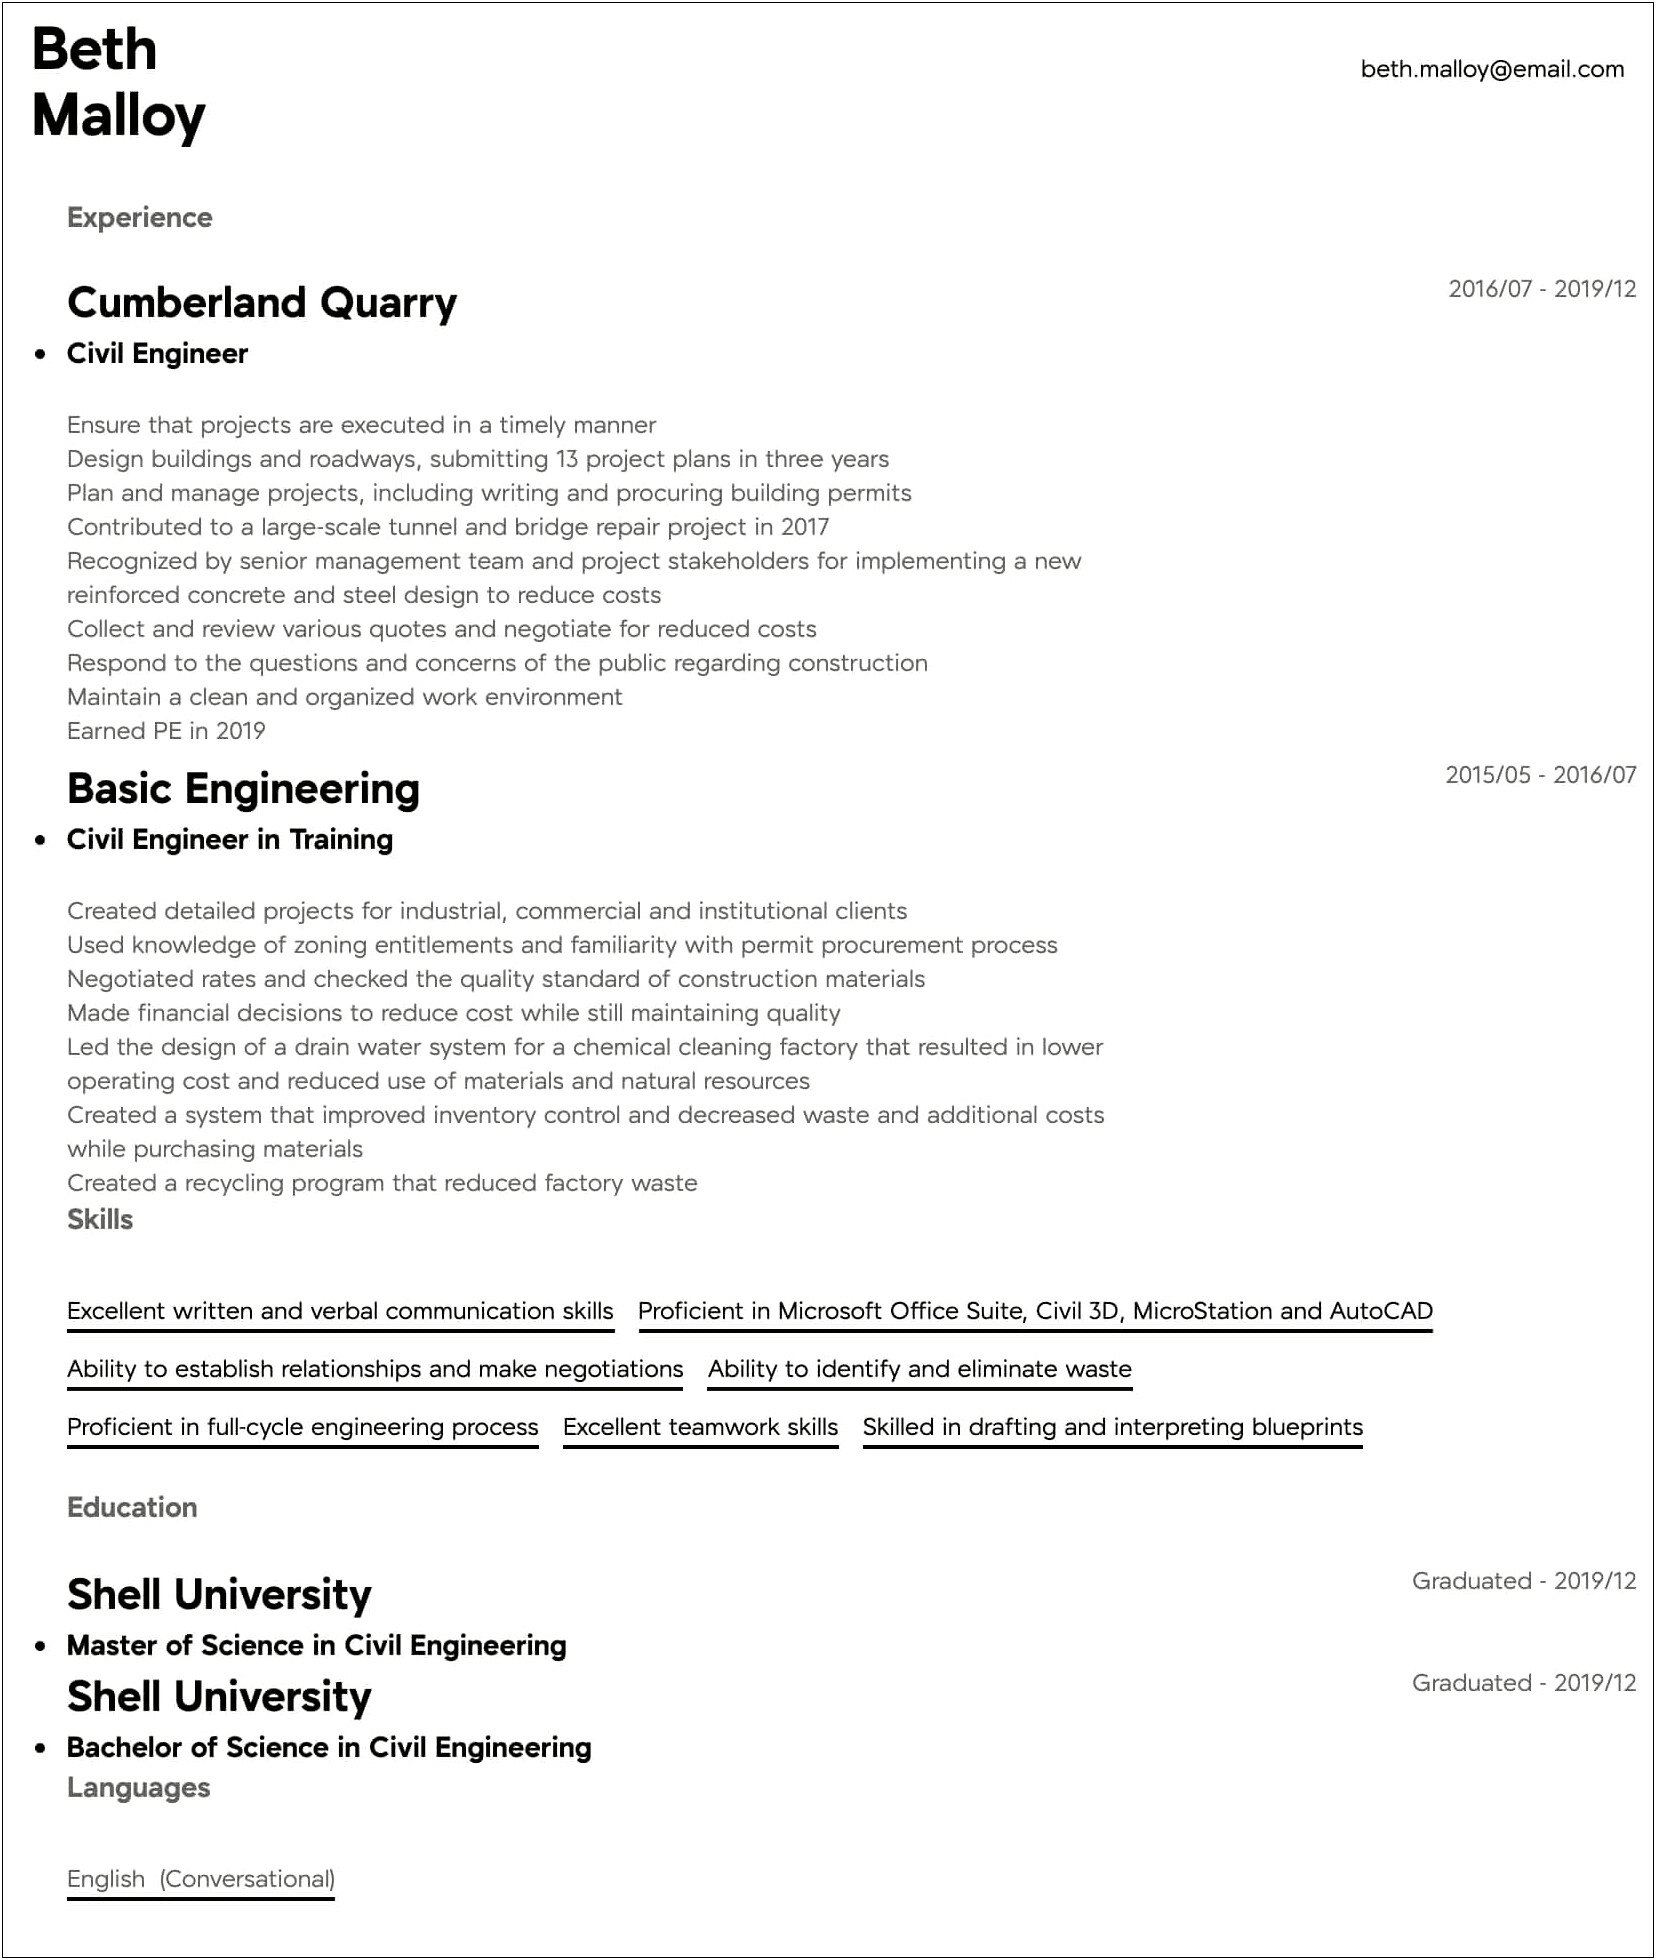 Resume Profile Summary For Civil Engineer